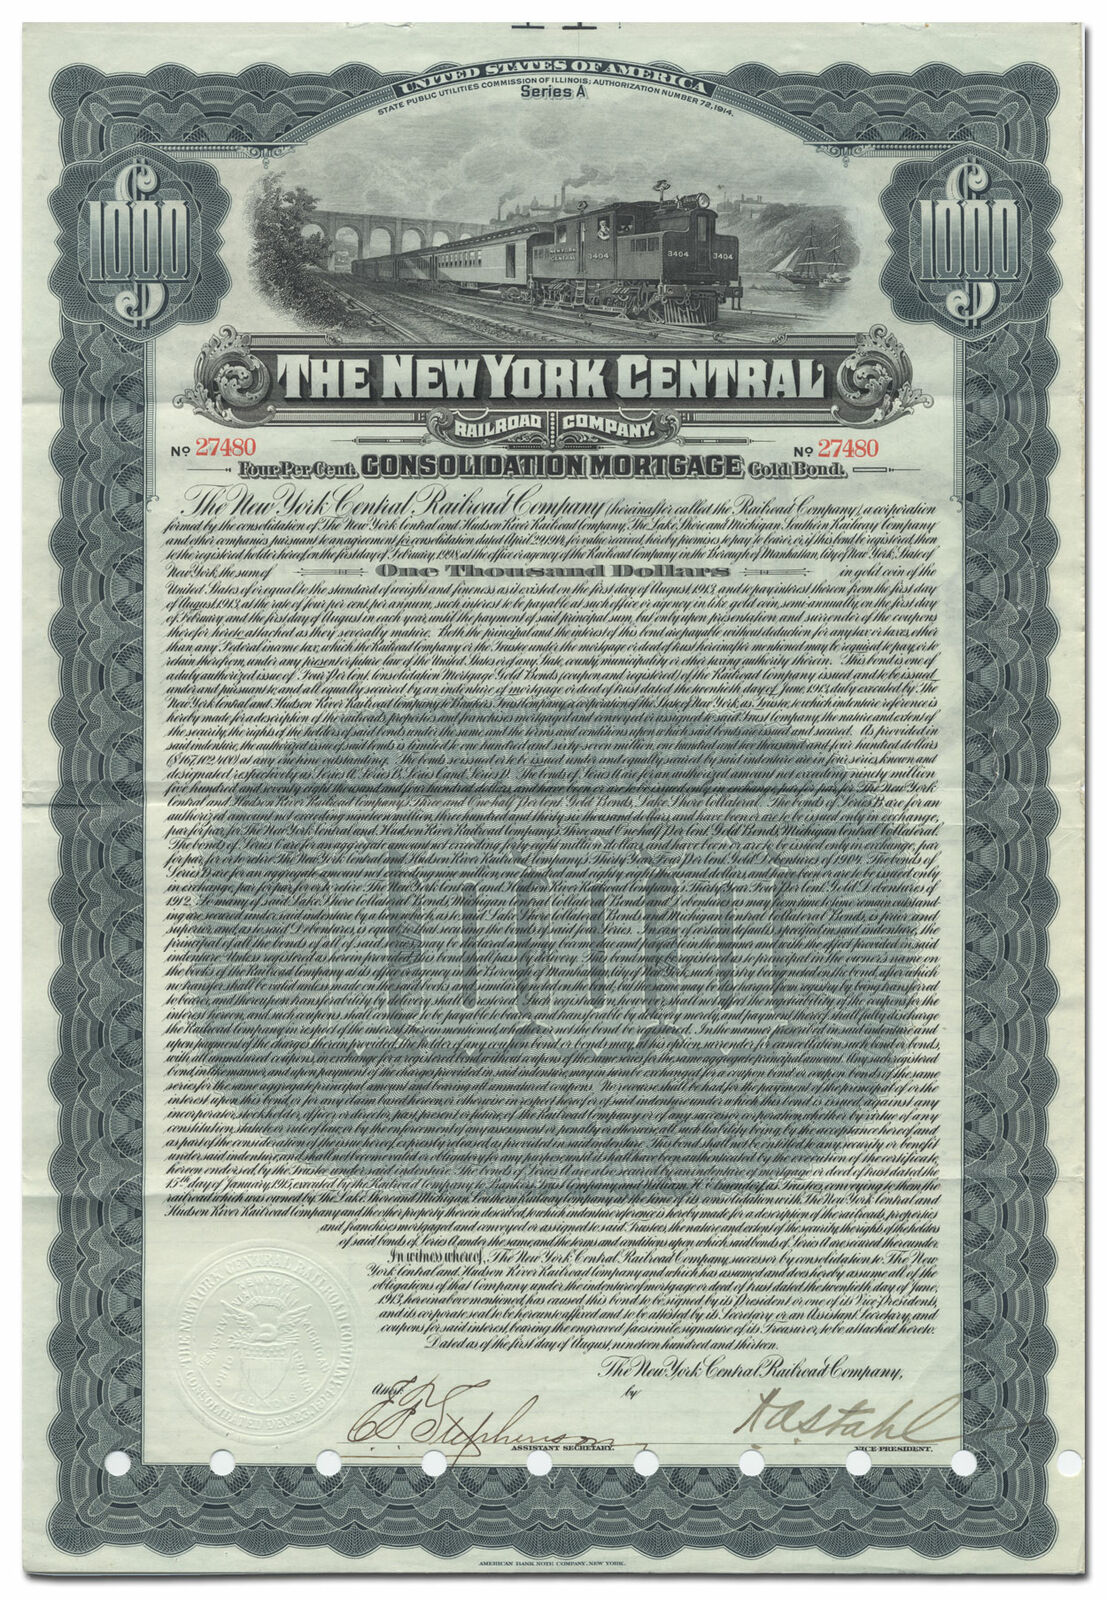 New York Central Railroad Company Bond Certificate - High Bridge